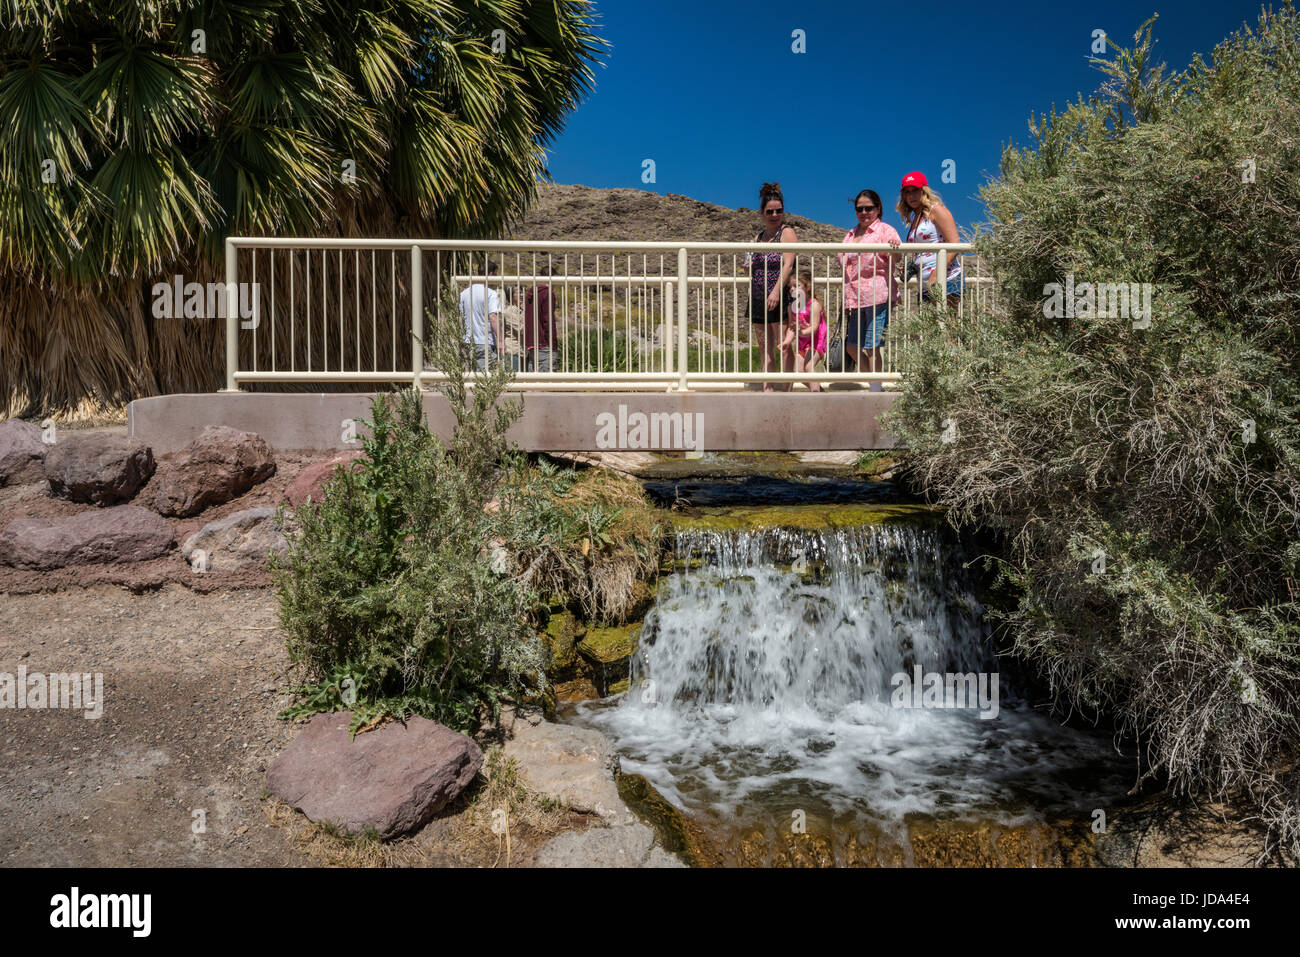 Besucher am kleinen Wasserfall bei Rogers Frühling, geothermische Thermalquelle Oasis, Northshore Road, Lake Mead National Recreation Area, Nevada, USA Stockfoto